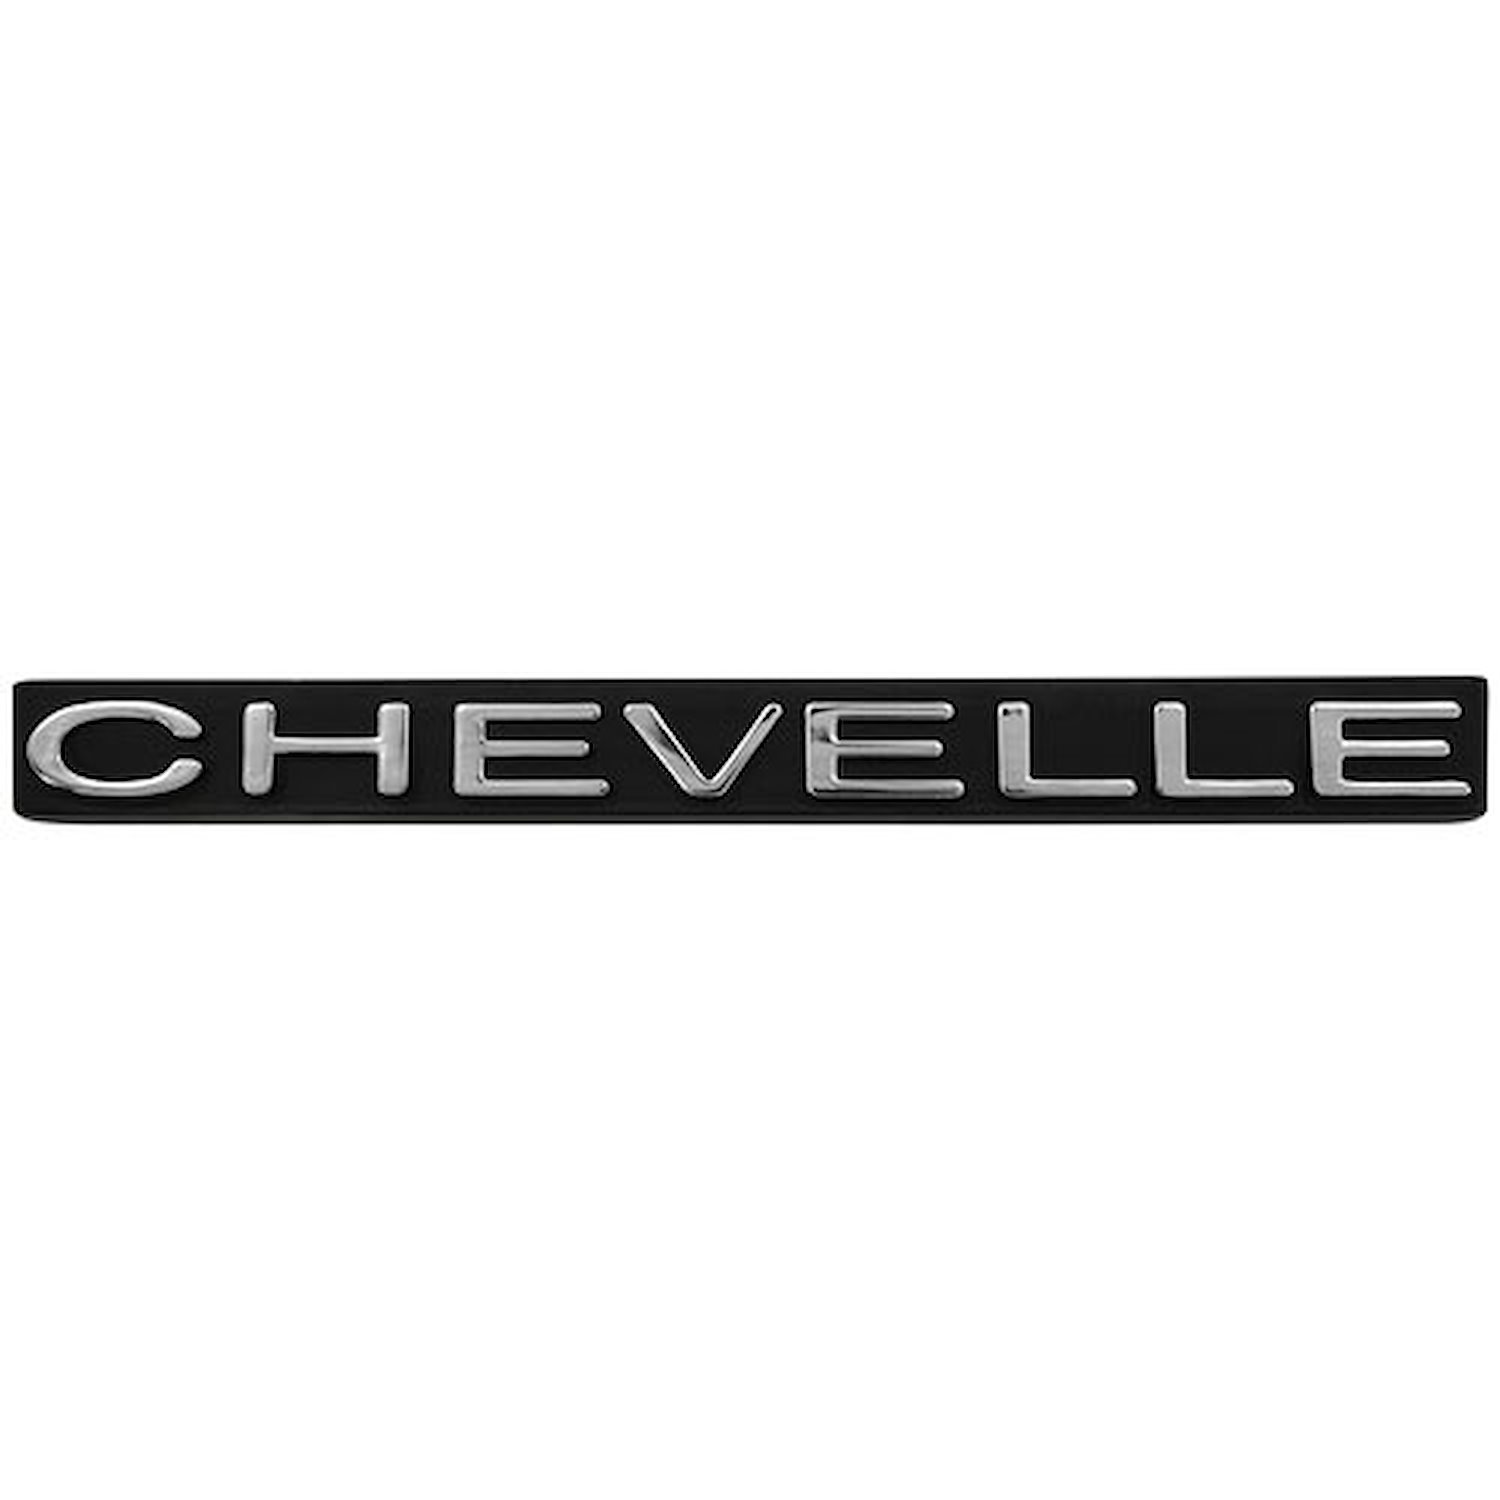 Grille Emblem 1970 Chevy Chevelle